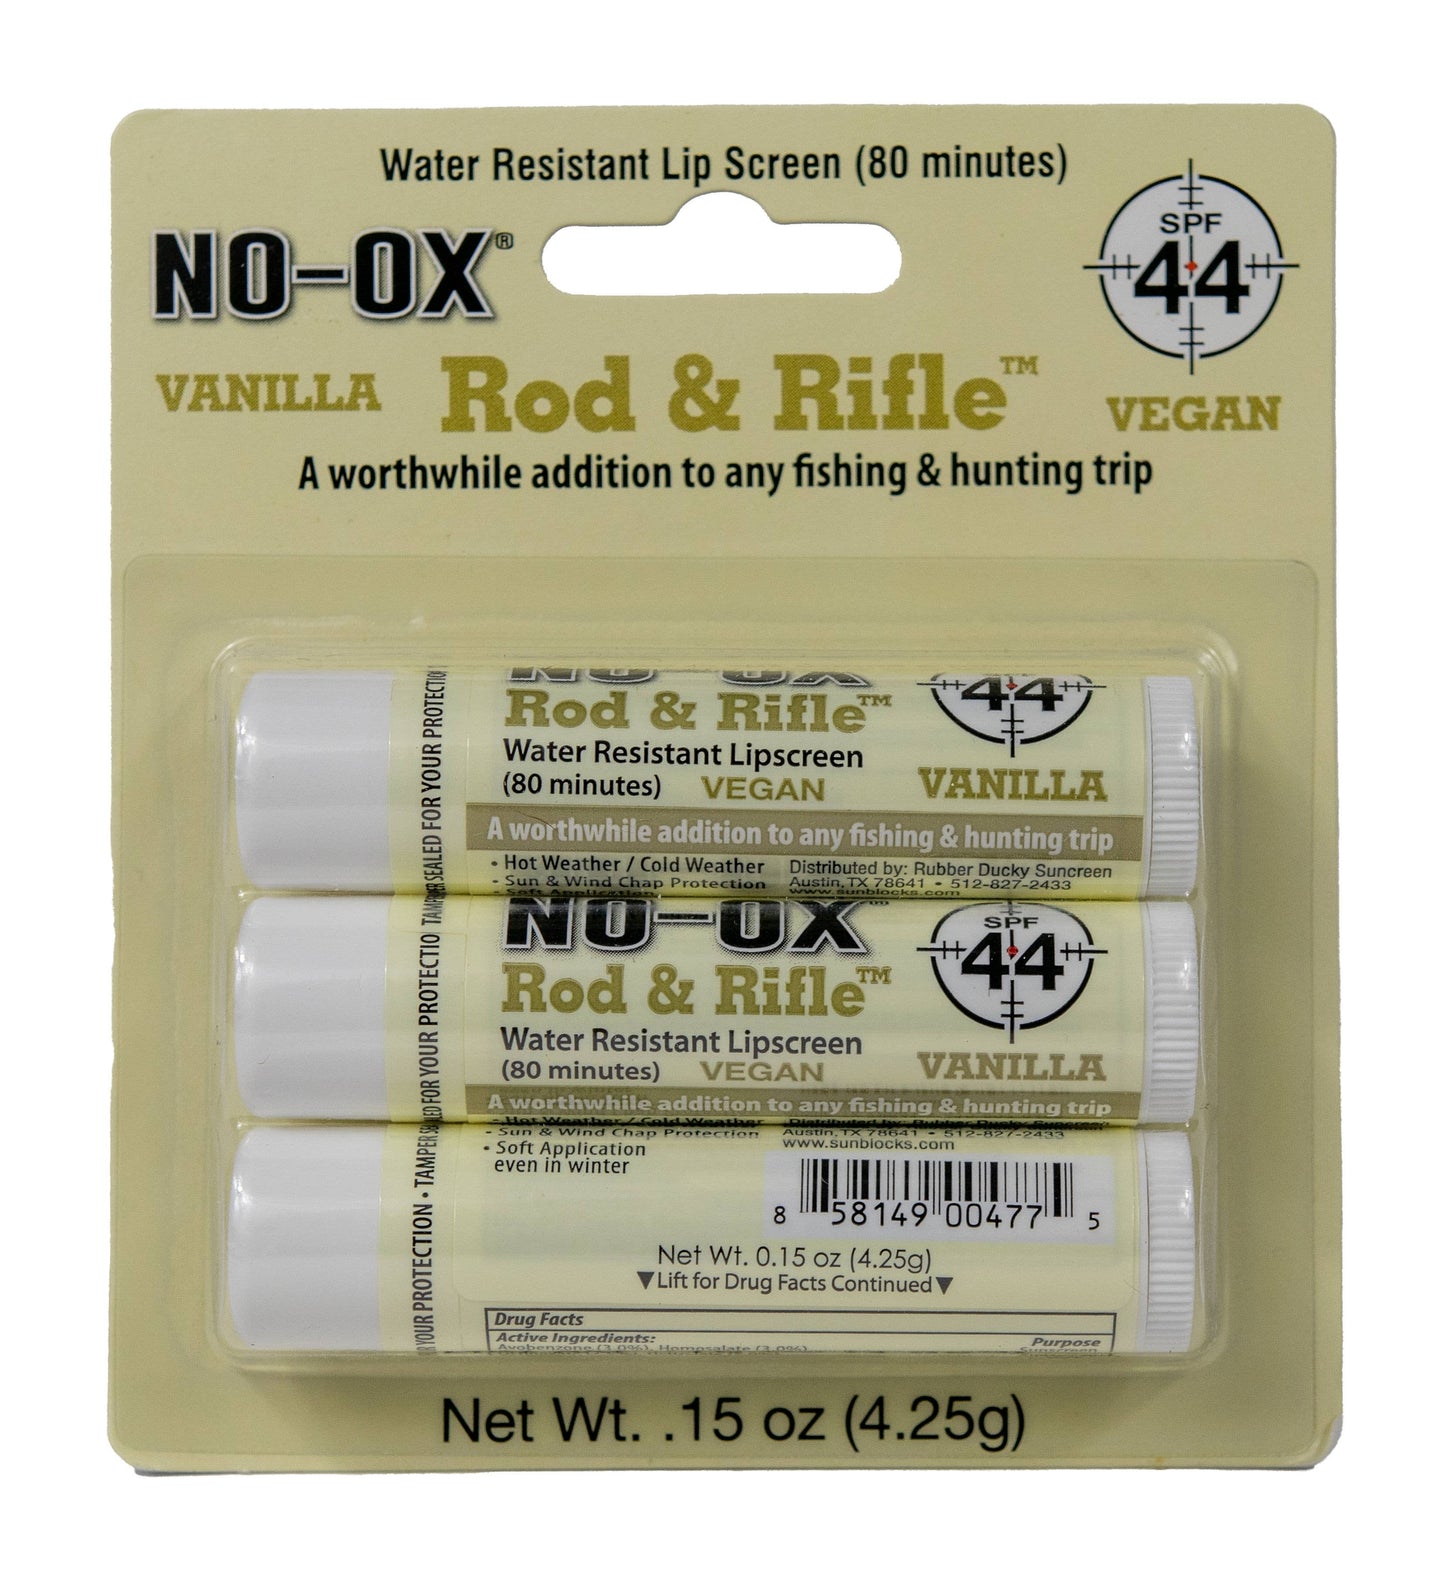 Rod & Rifle SPF 44 Lip Sunscreen 3-pack blister card